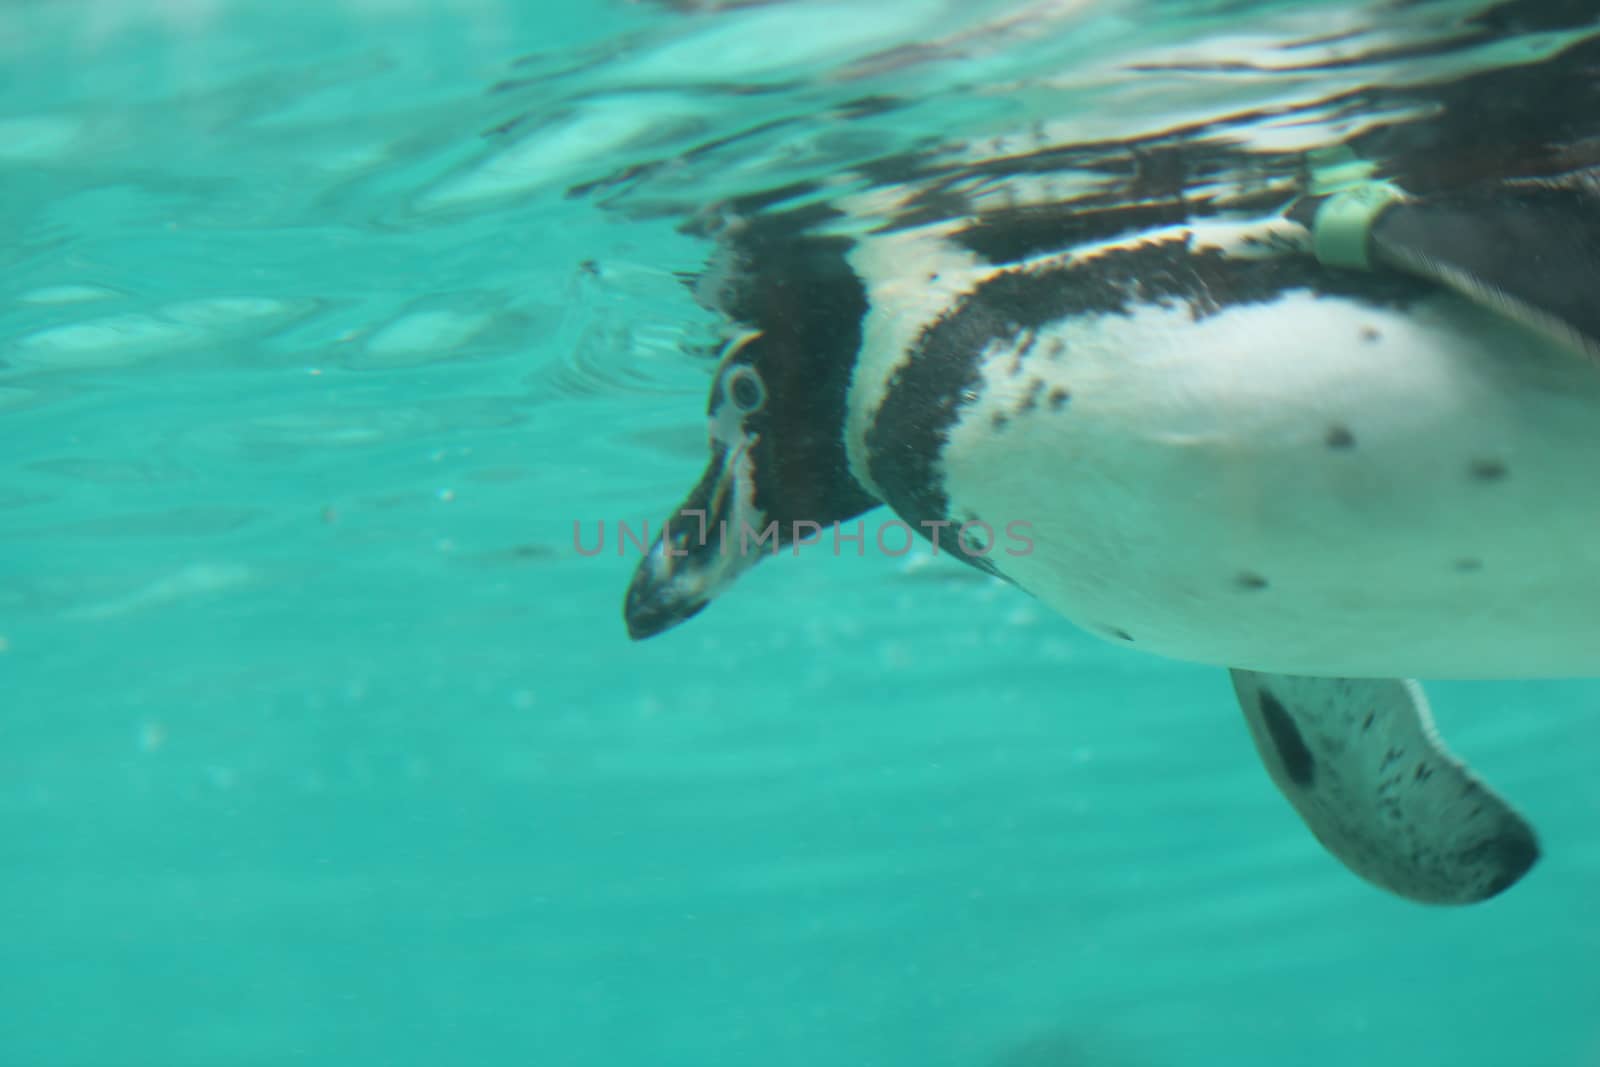 humbolt penguin swimming (Spheniscus humboldti) by cheekylorns